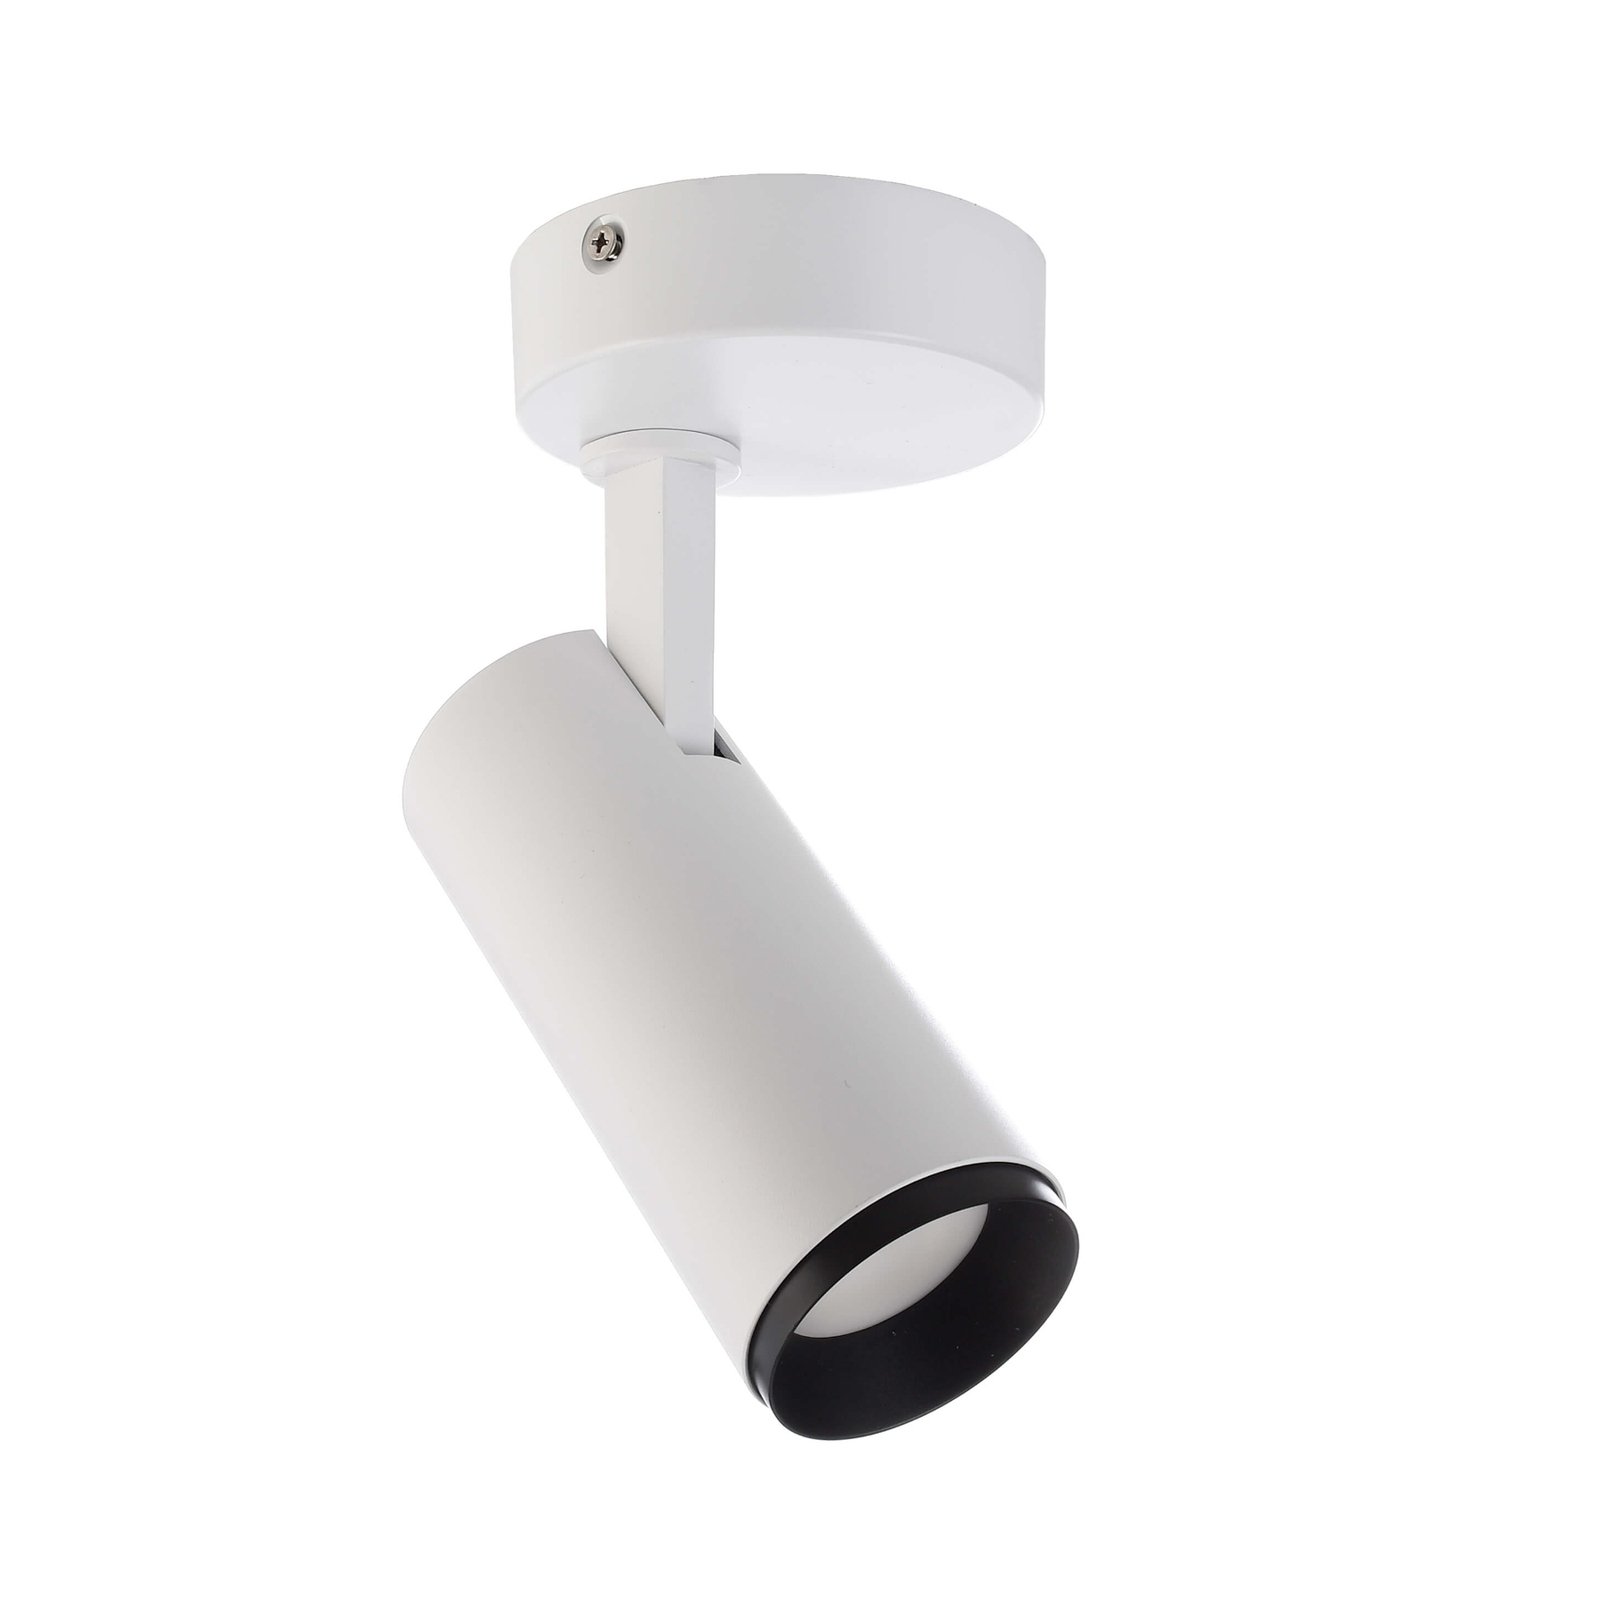 LED downlight Lucea, adjustable, 10 W white